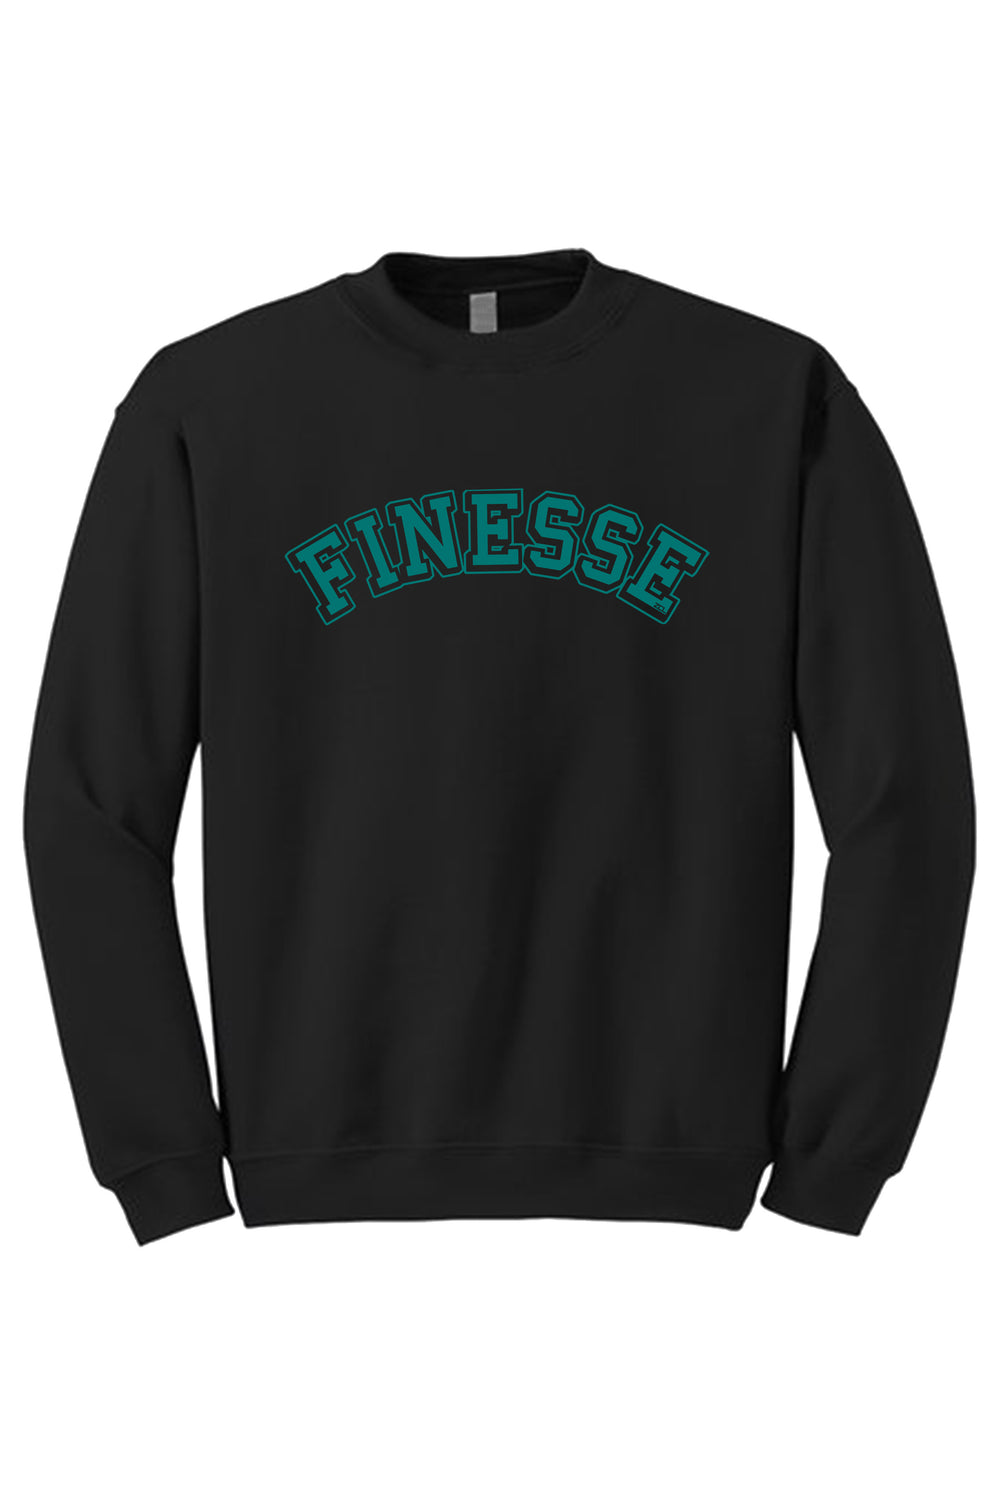 Finesse Crewneck Sweatshirt (Teal Logo) - Zamage